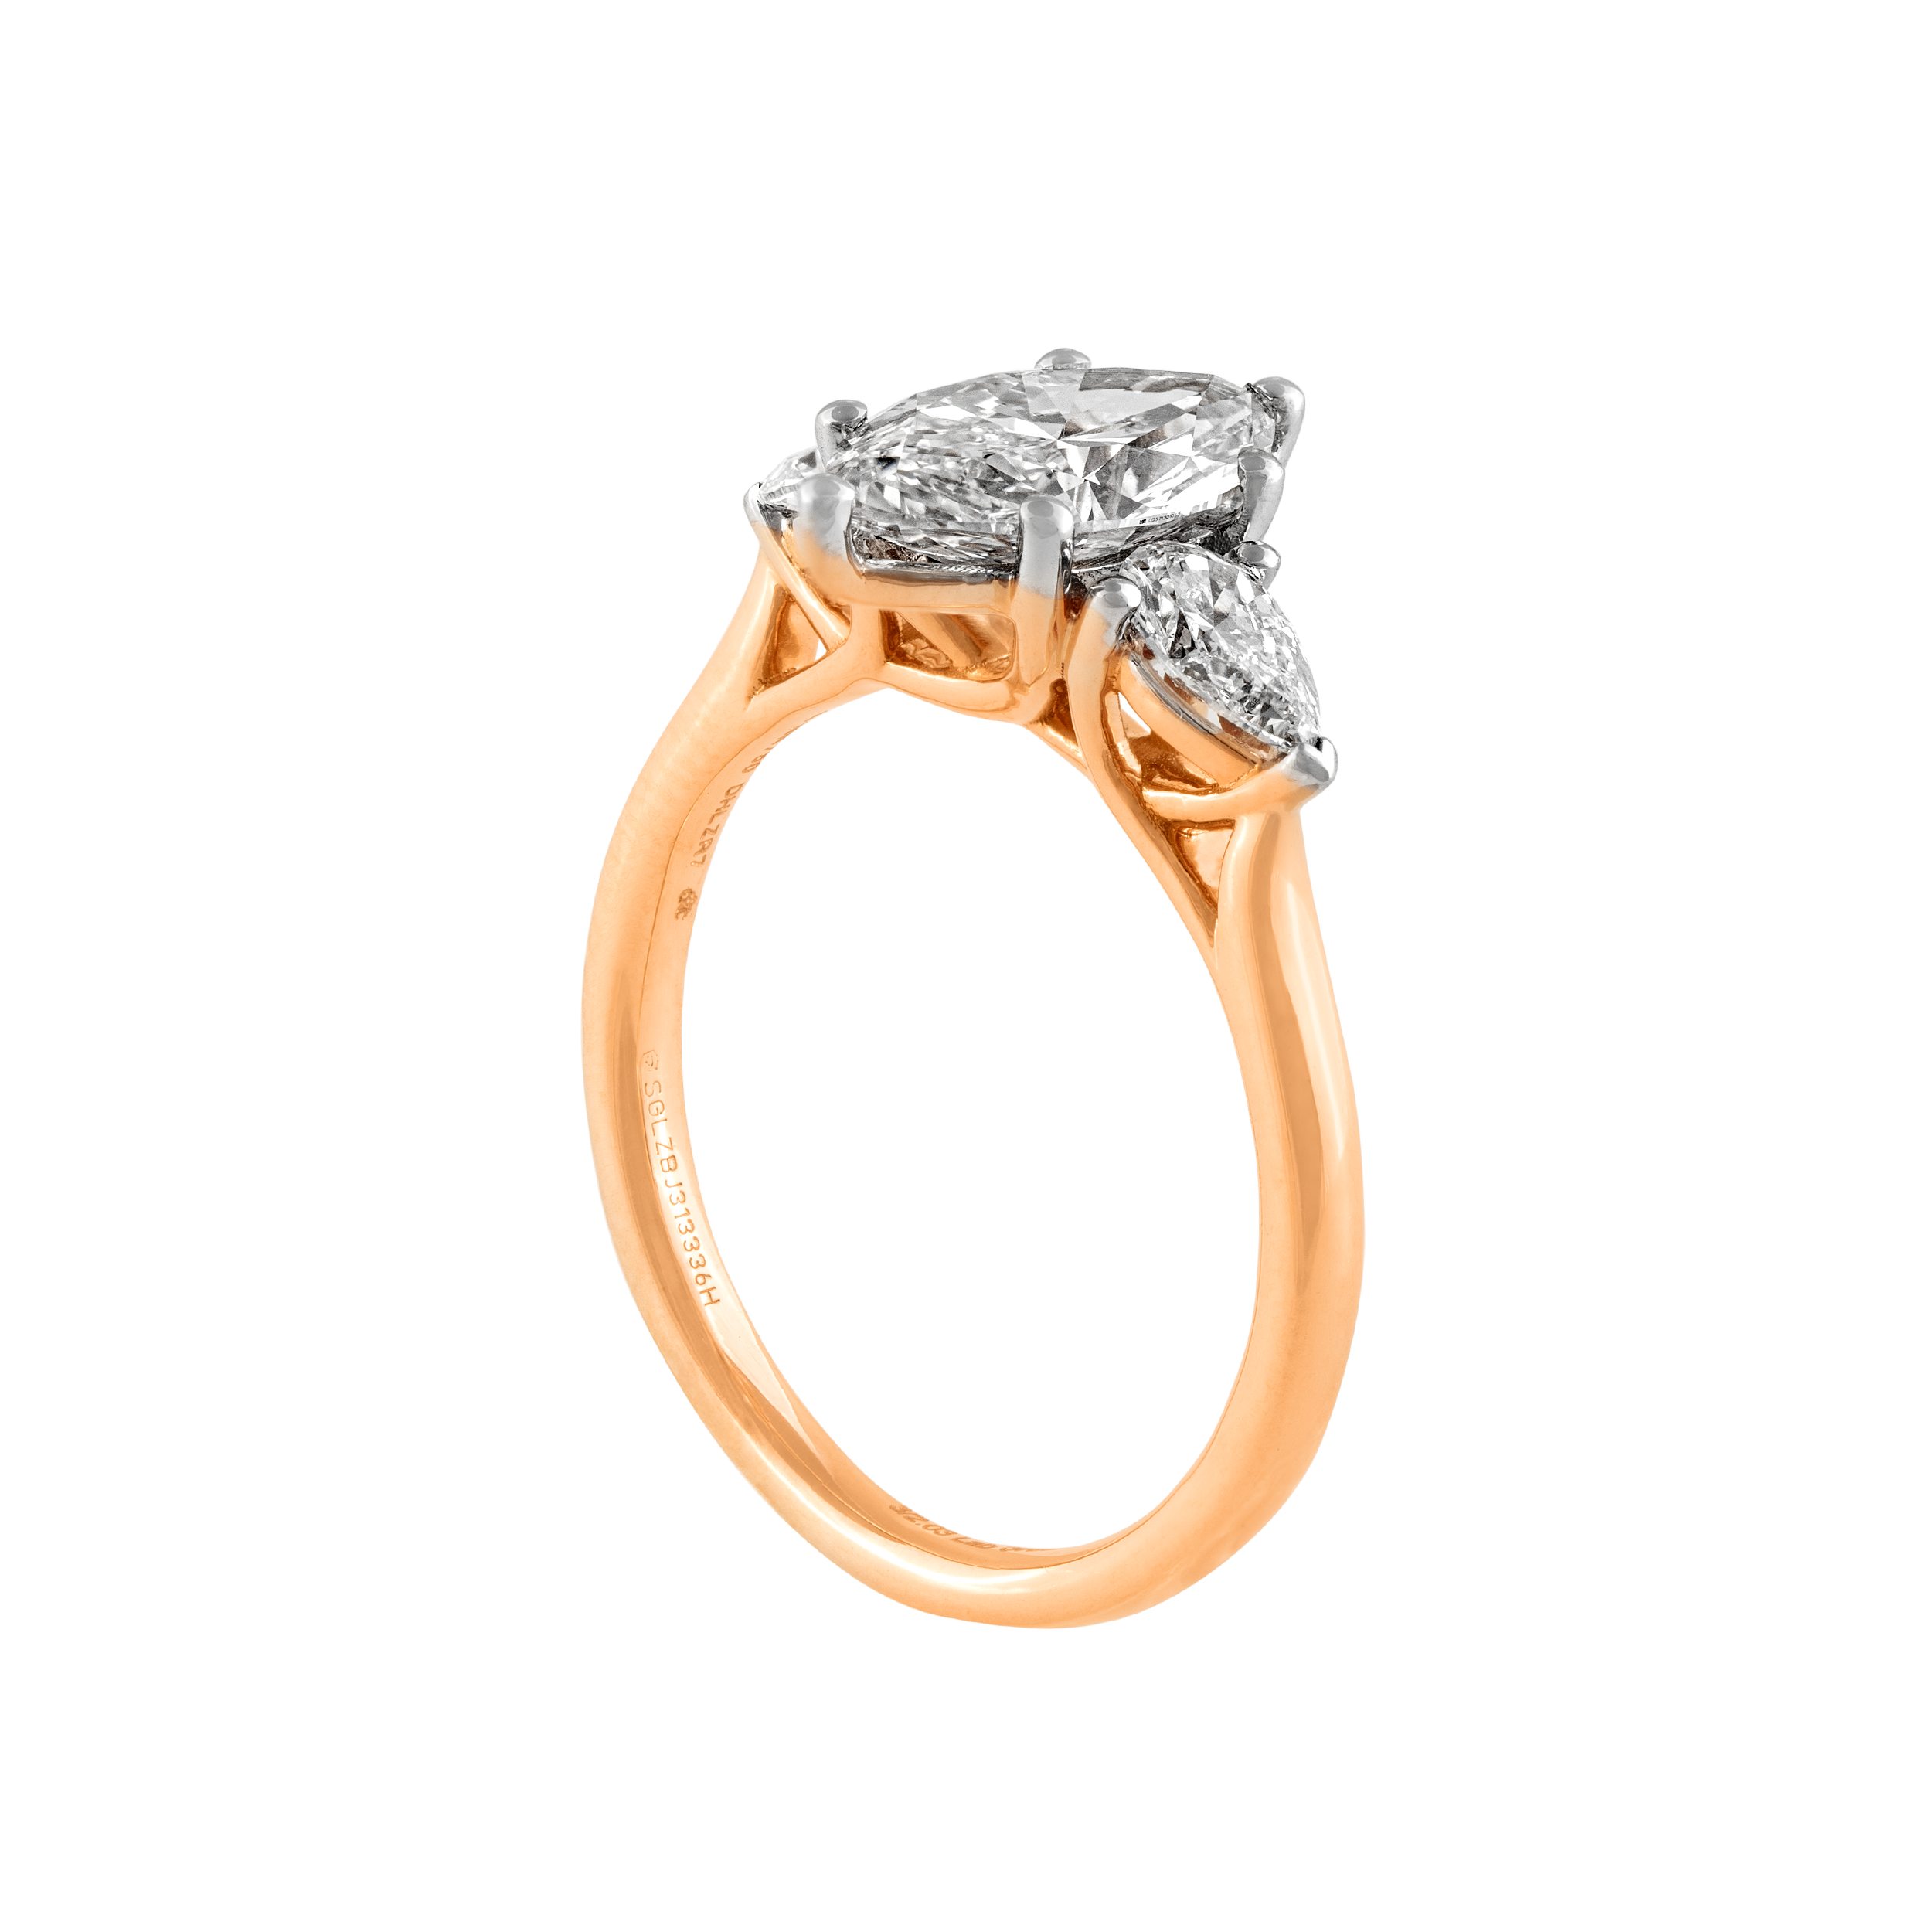 Graceful Lab Grown Diamonds in a Classy Elegance Ring  | SKU: 0019052649